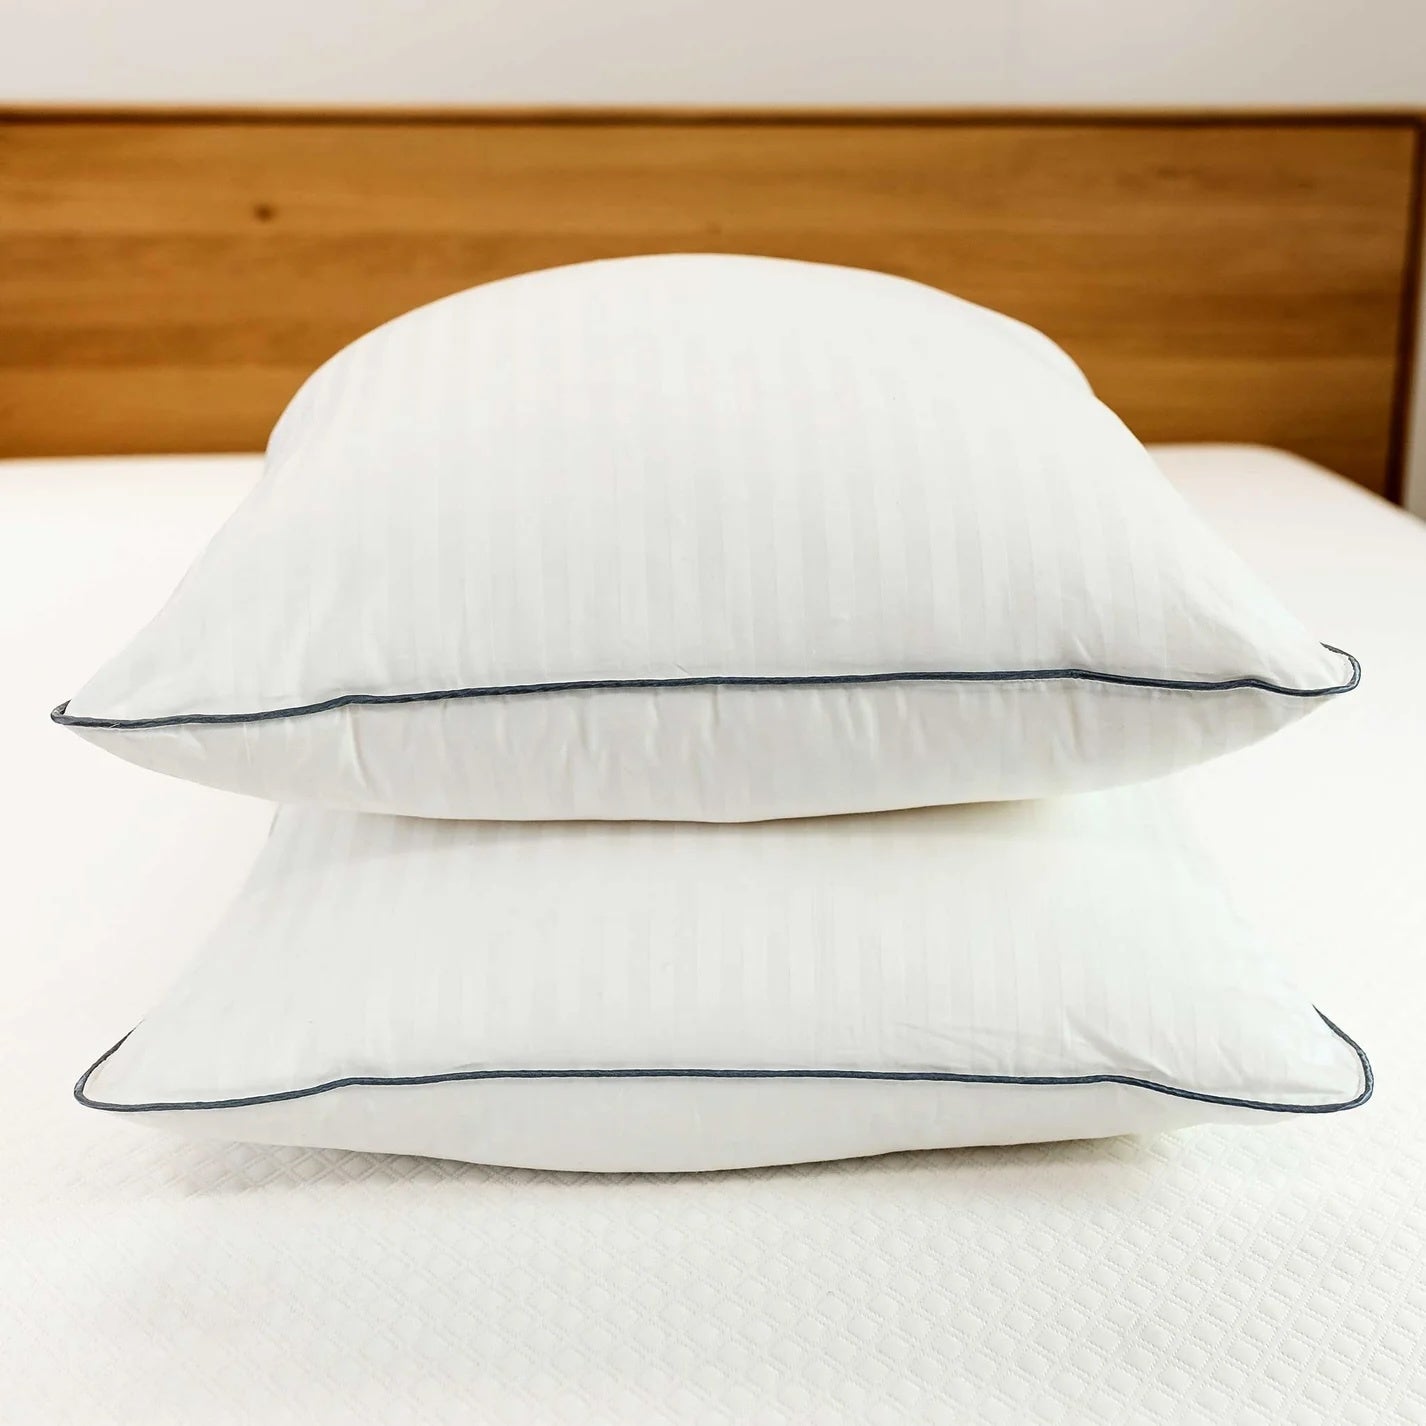 Rx2Pk 2 Pack Pillows - White Foam